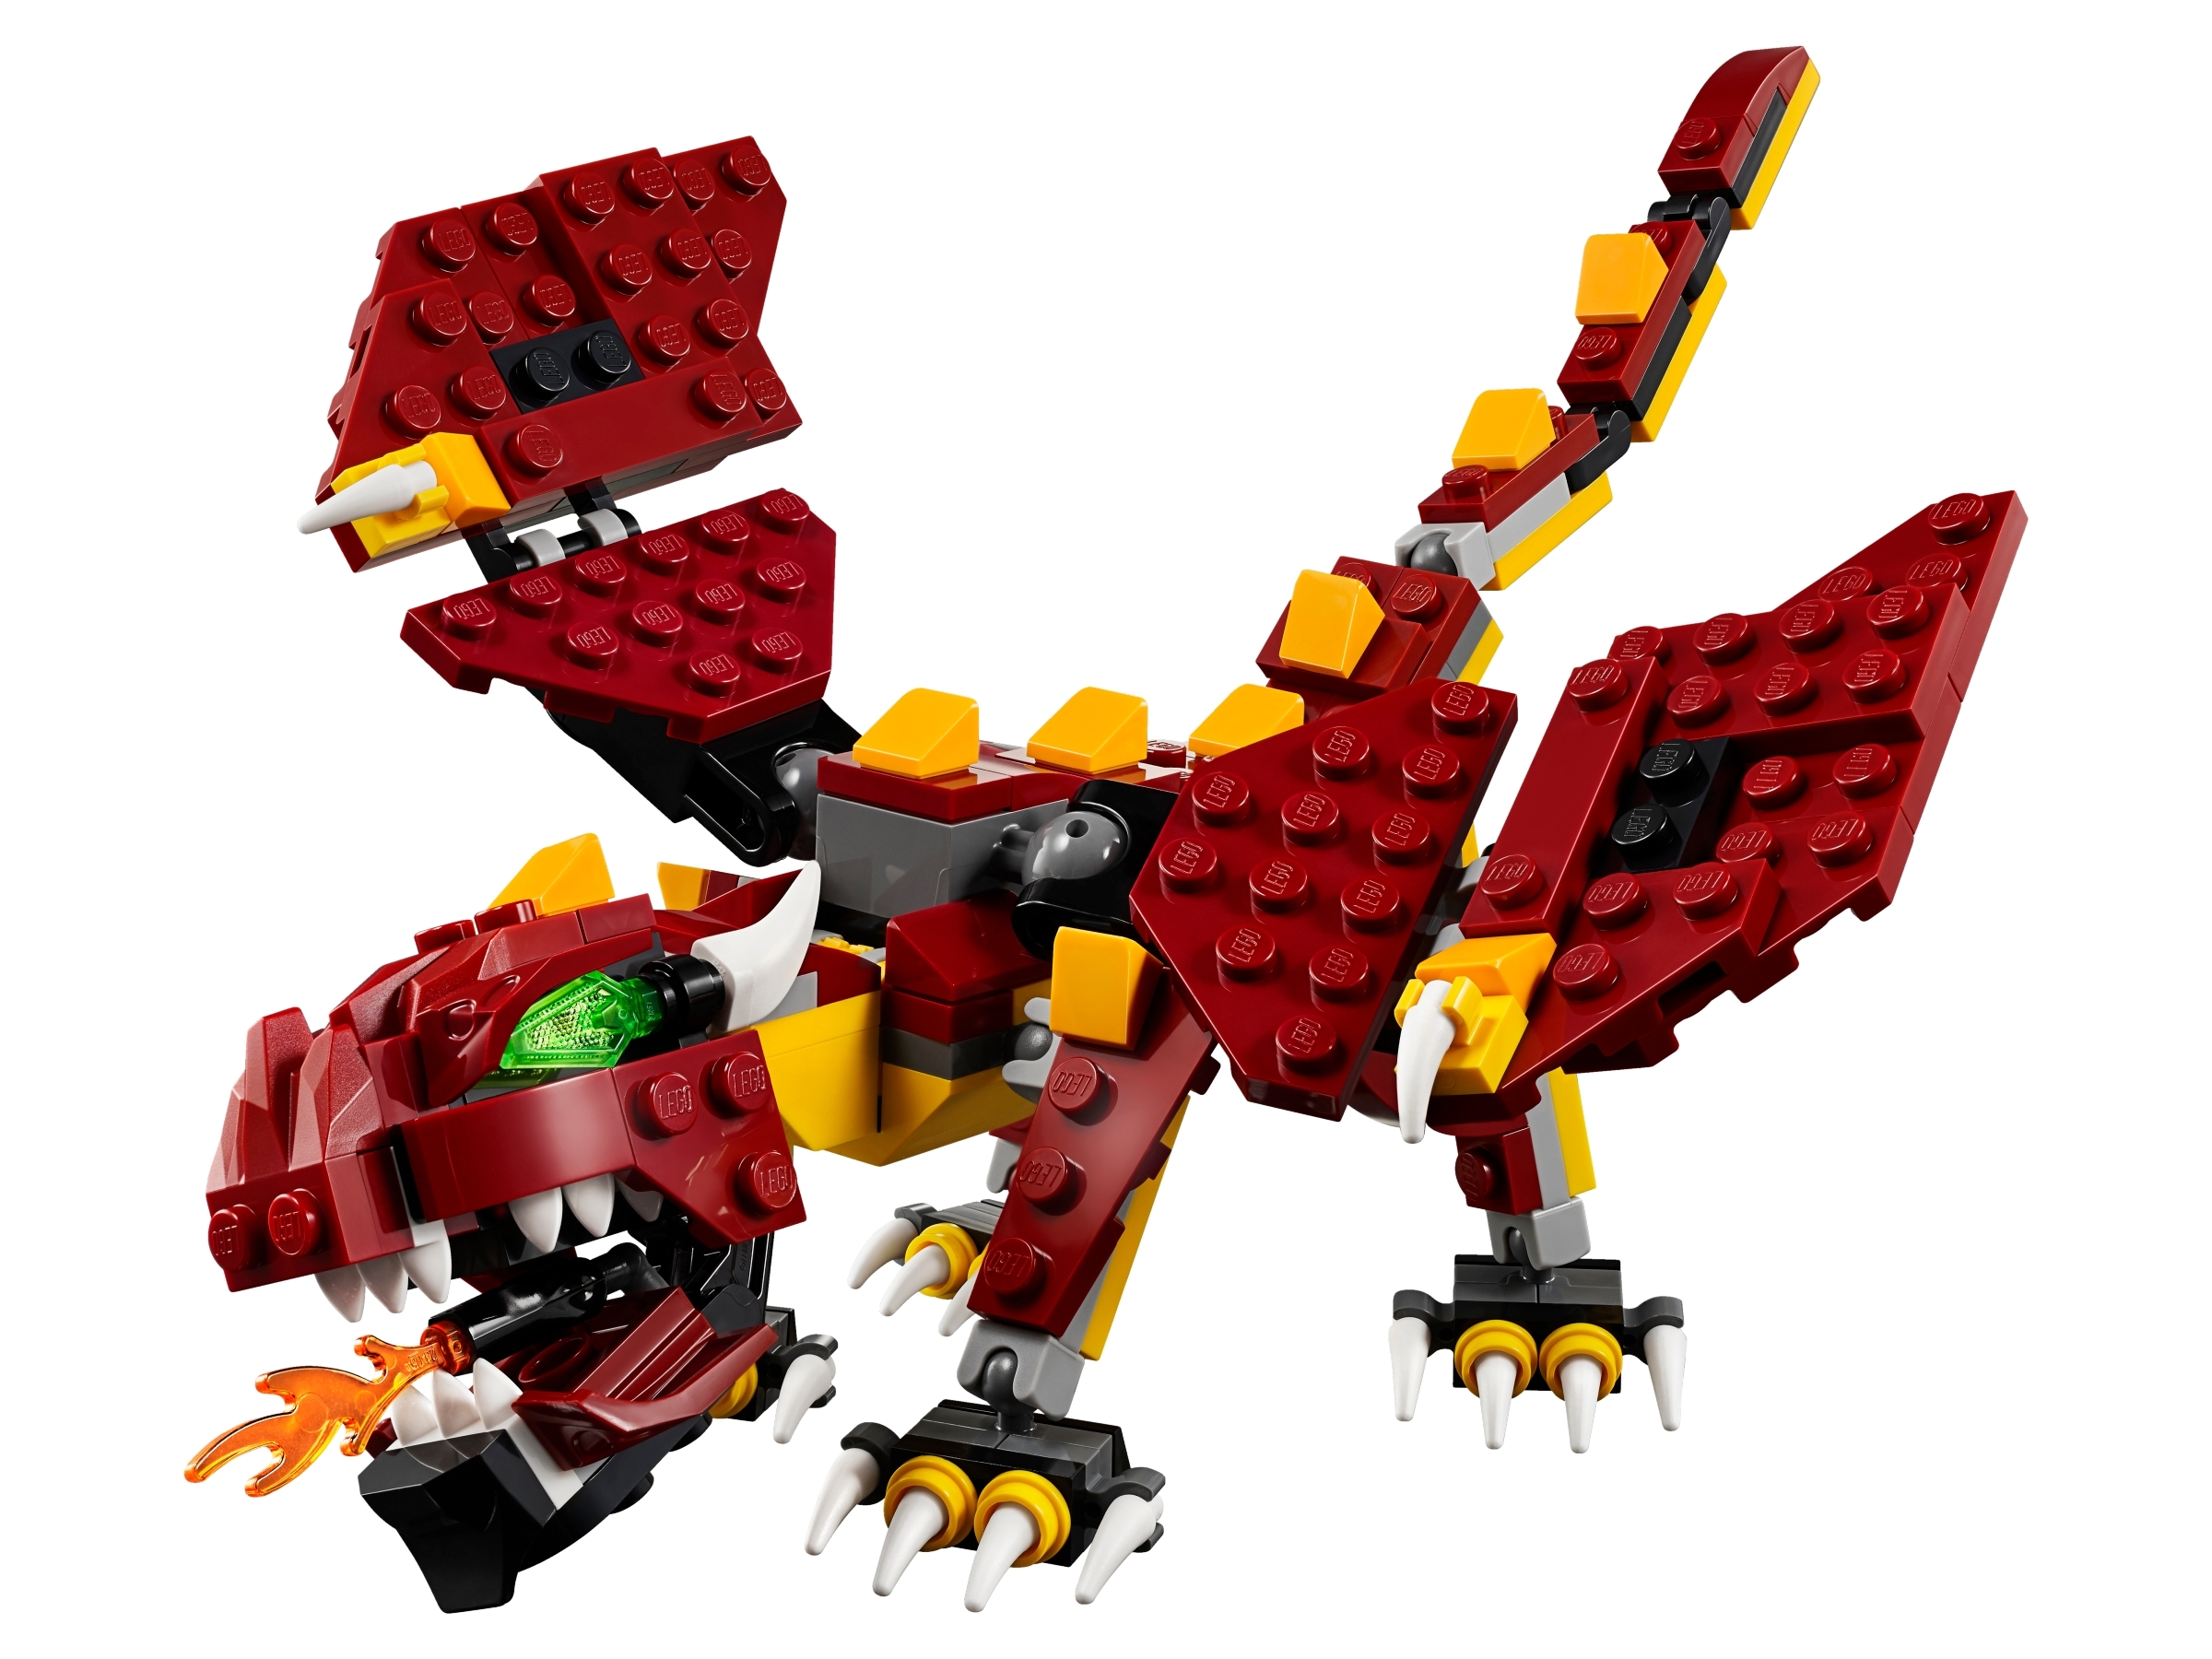 Lego 31073 creator 3in1 créature imaginaire dragon neuf dans sa boîte/New